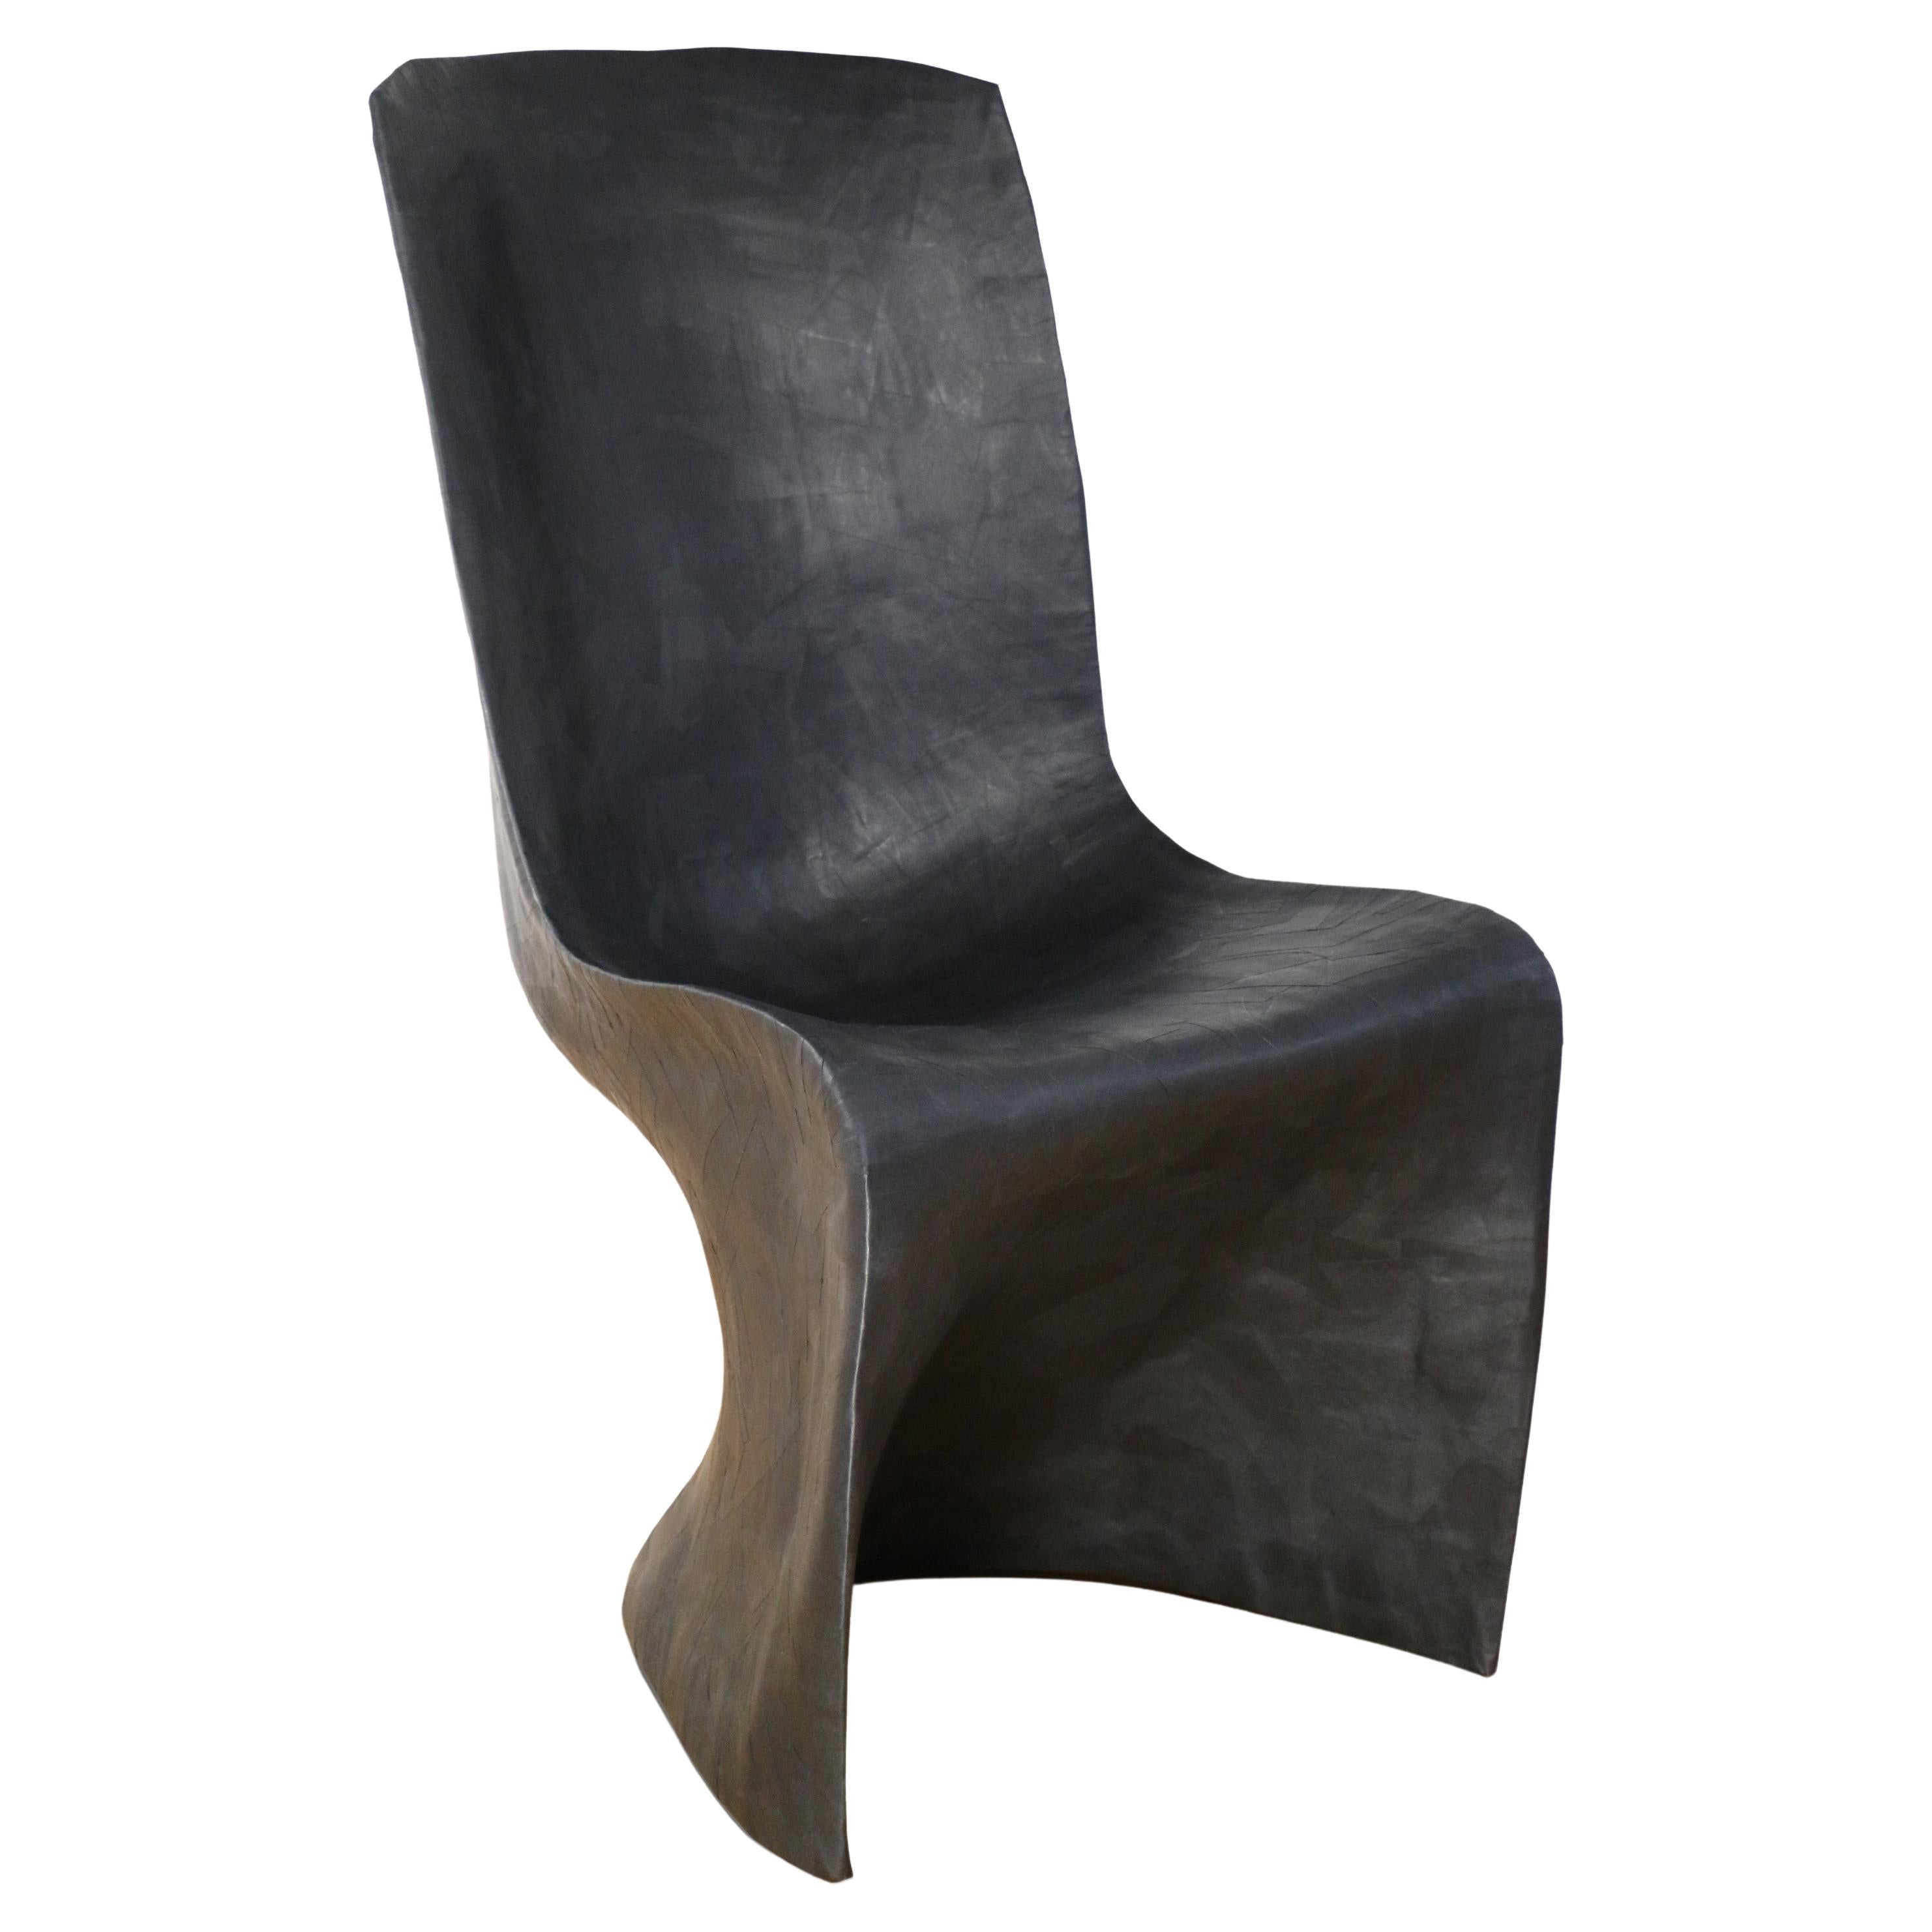 Collectible Design Unique Black Paper Chair Black Lotus by Vadim Kibardin